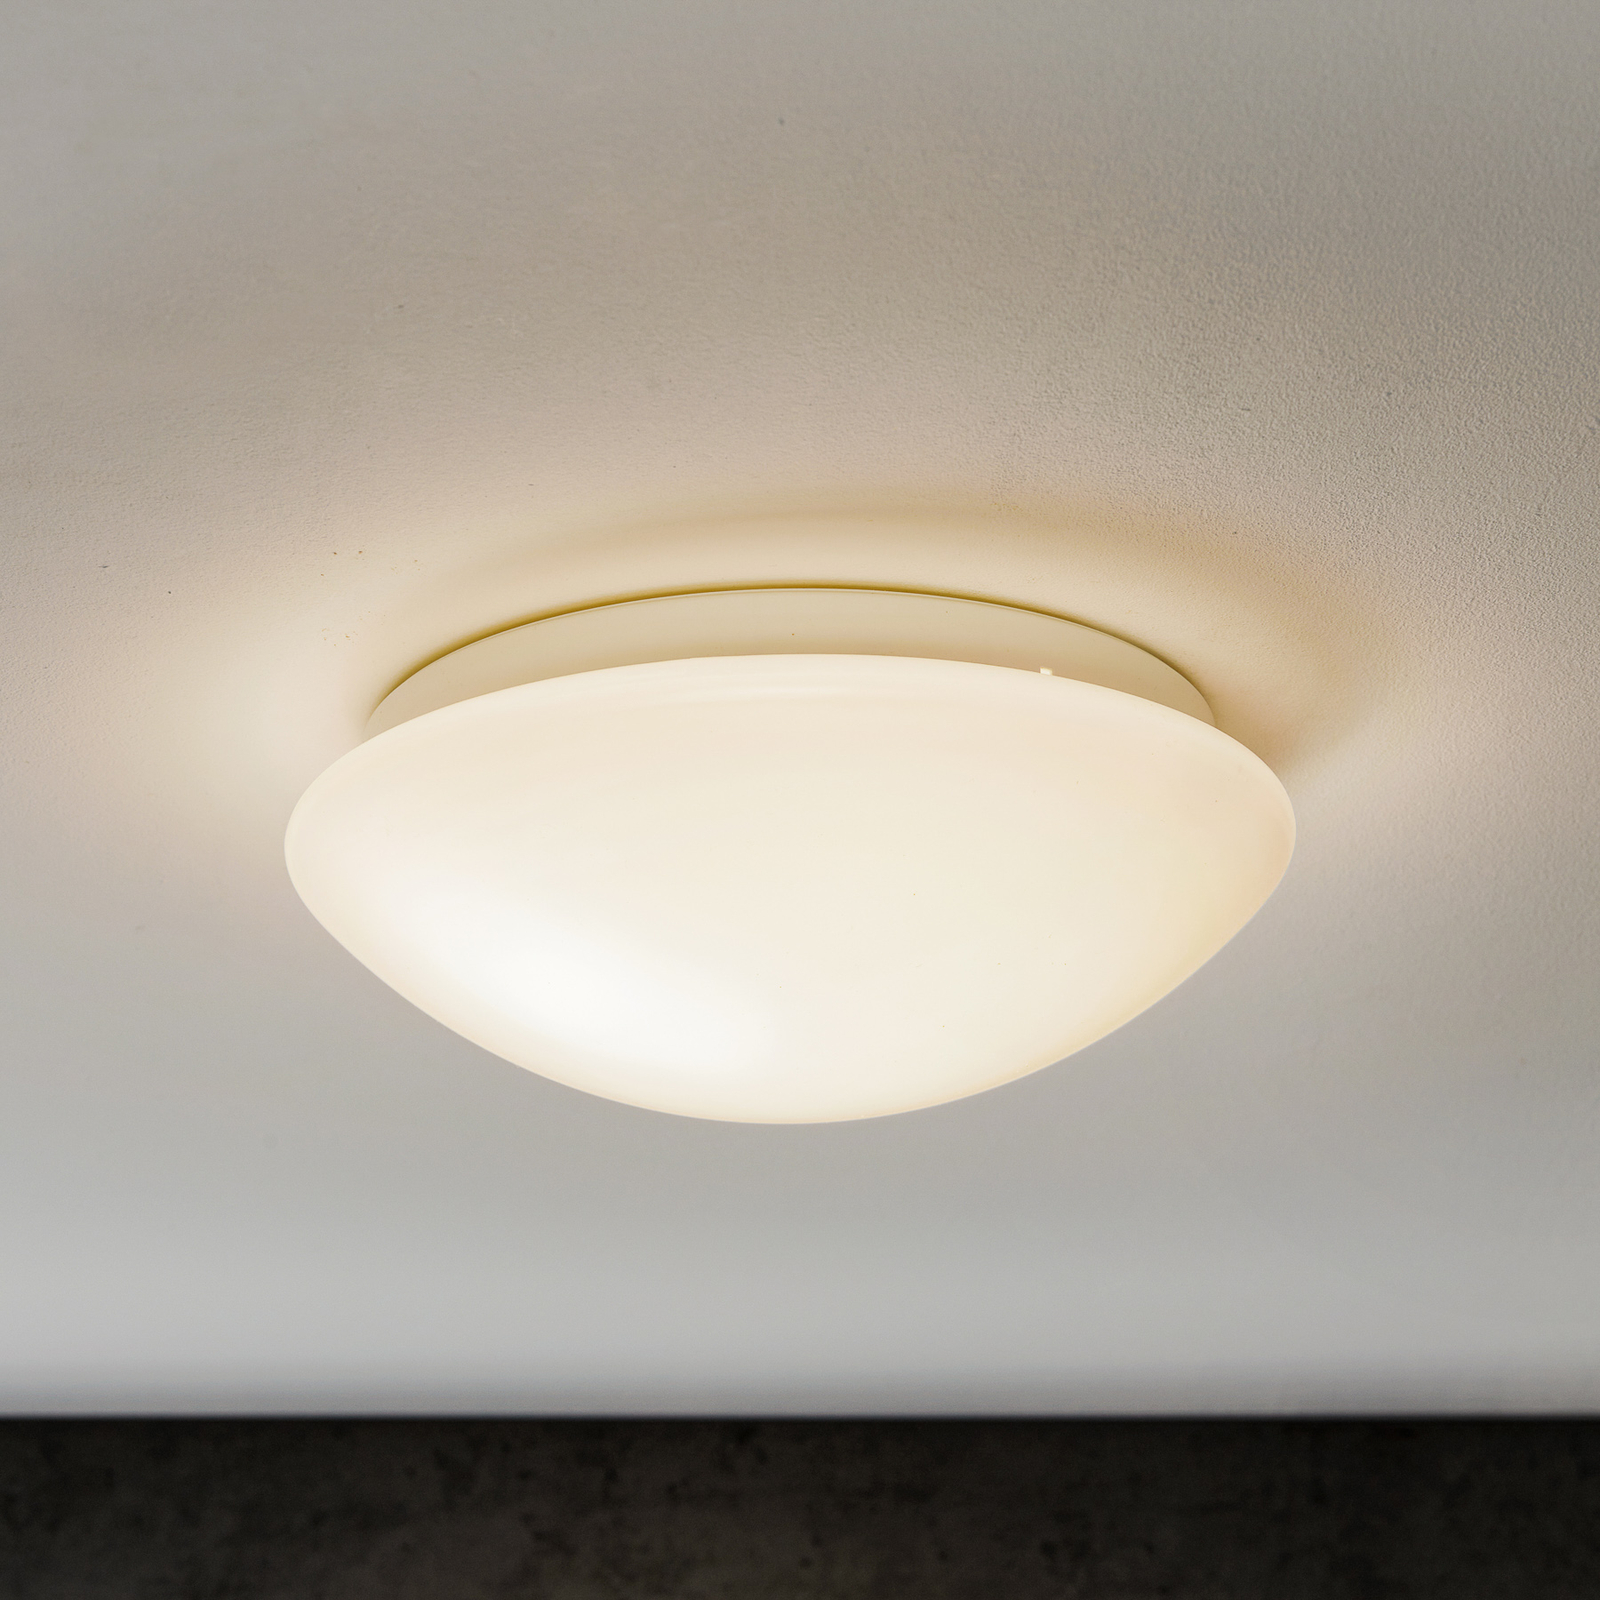 afgunst Geroosterd optie STEINEL RS 16 S LED plafondlamp met sensor | Lampen24.be